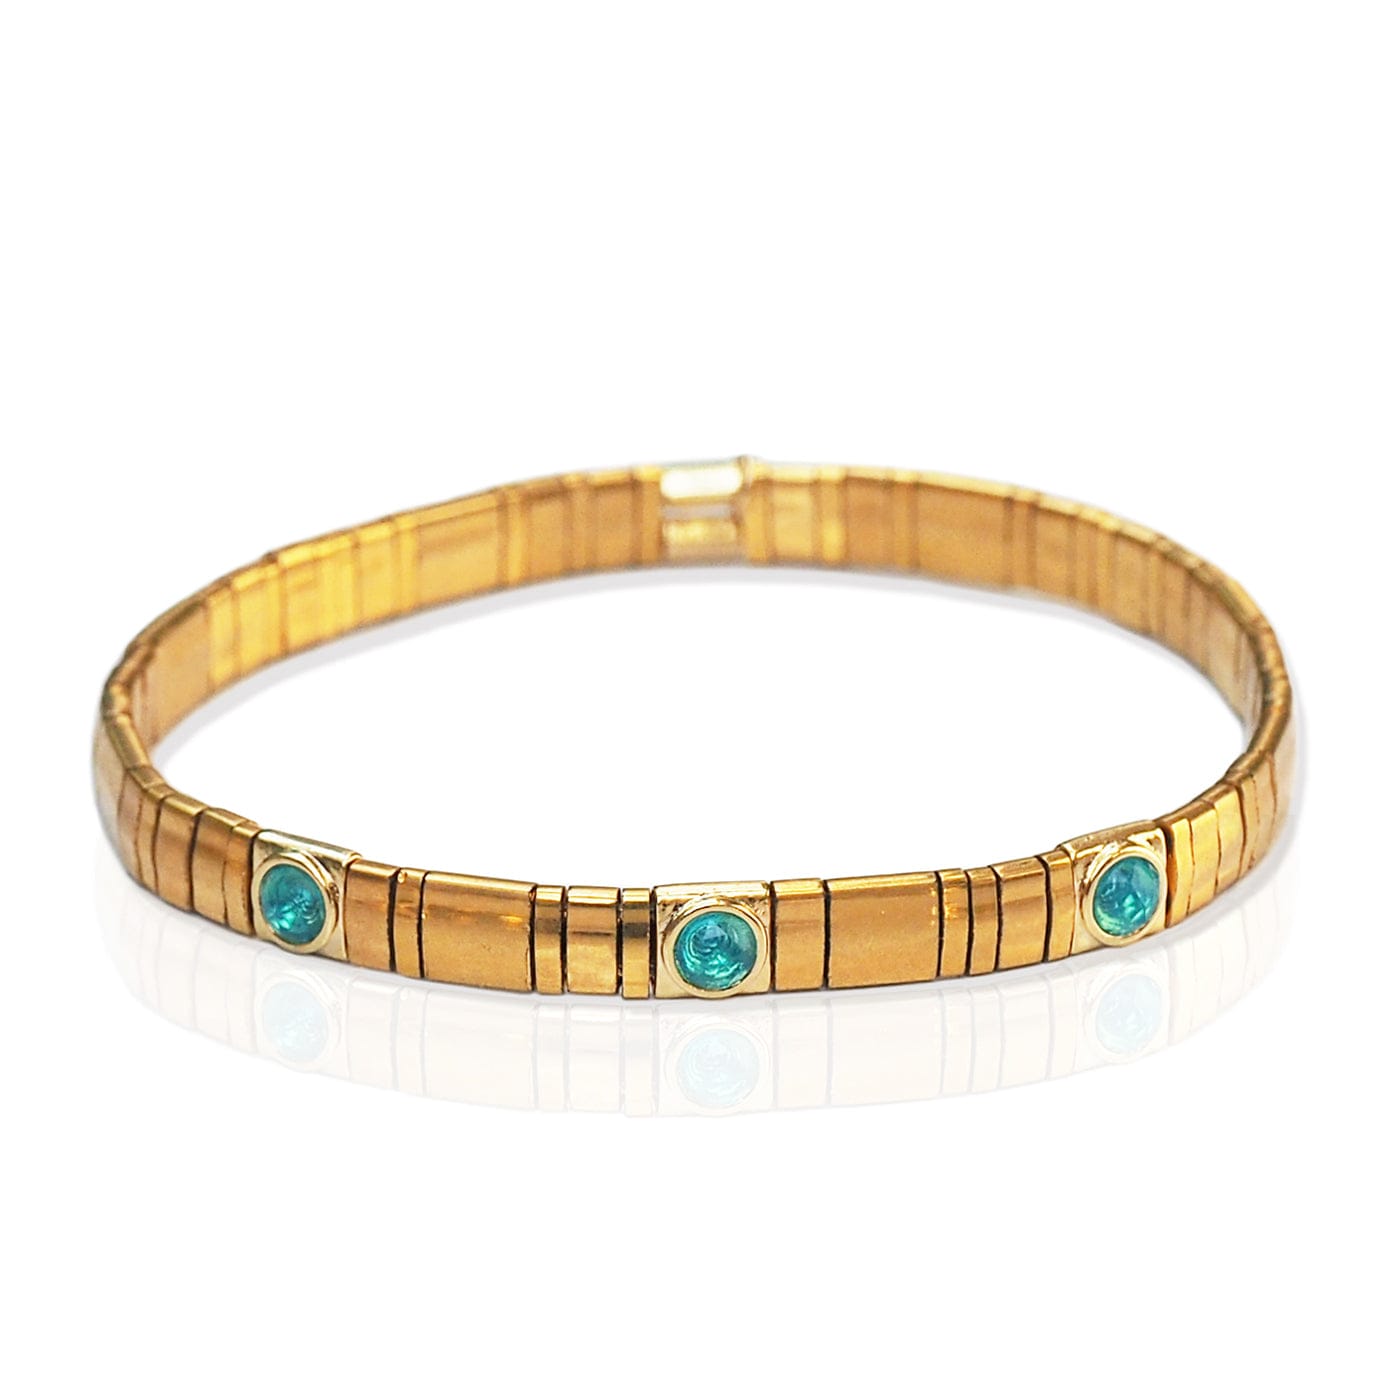 TAI JEWELRY Bracelet -2 Handmade Gold Tila Bead Bracelet With Scattered Stone